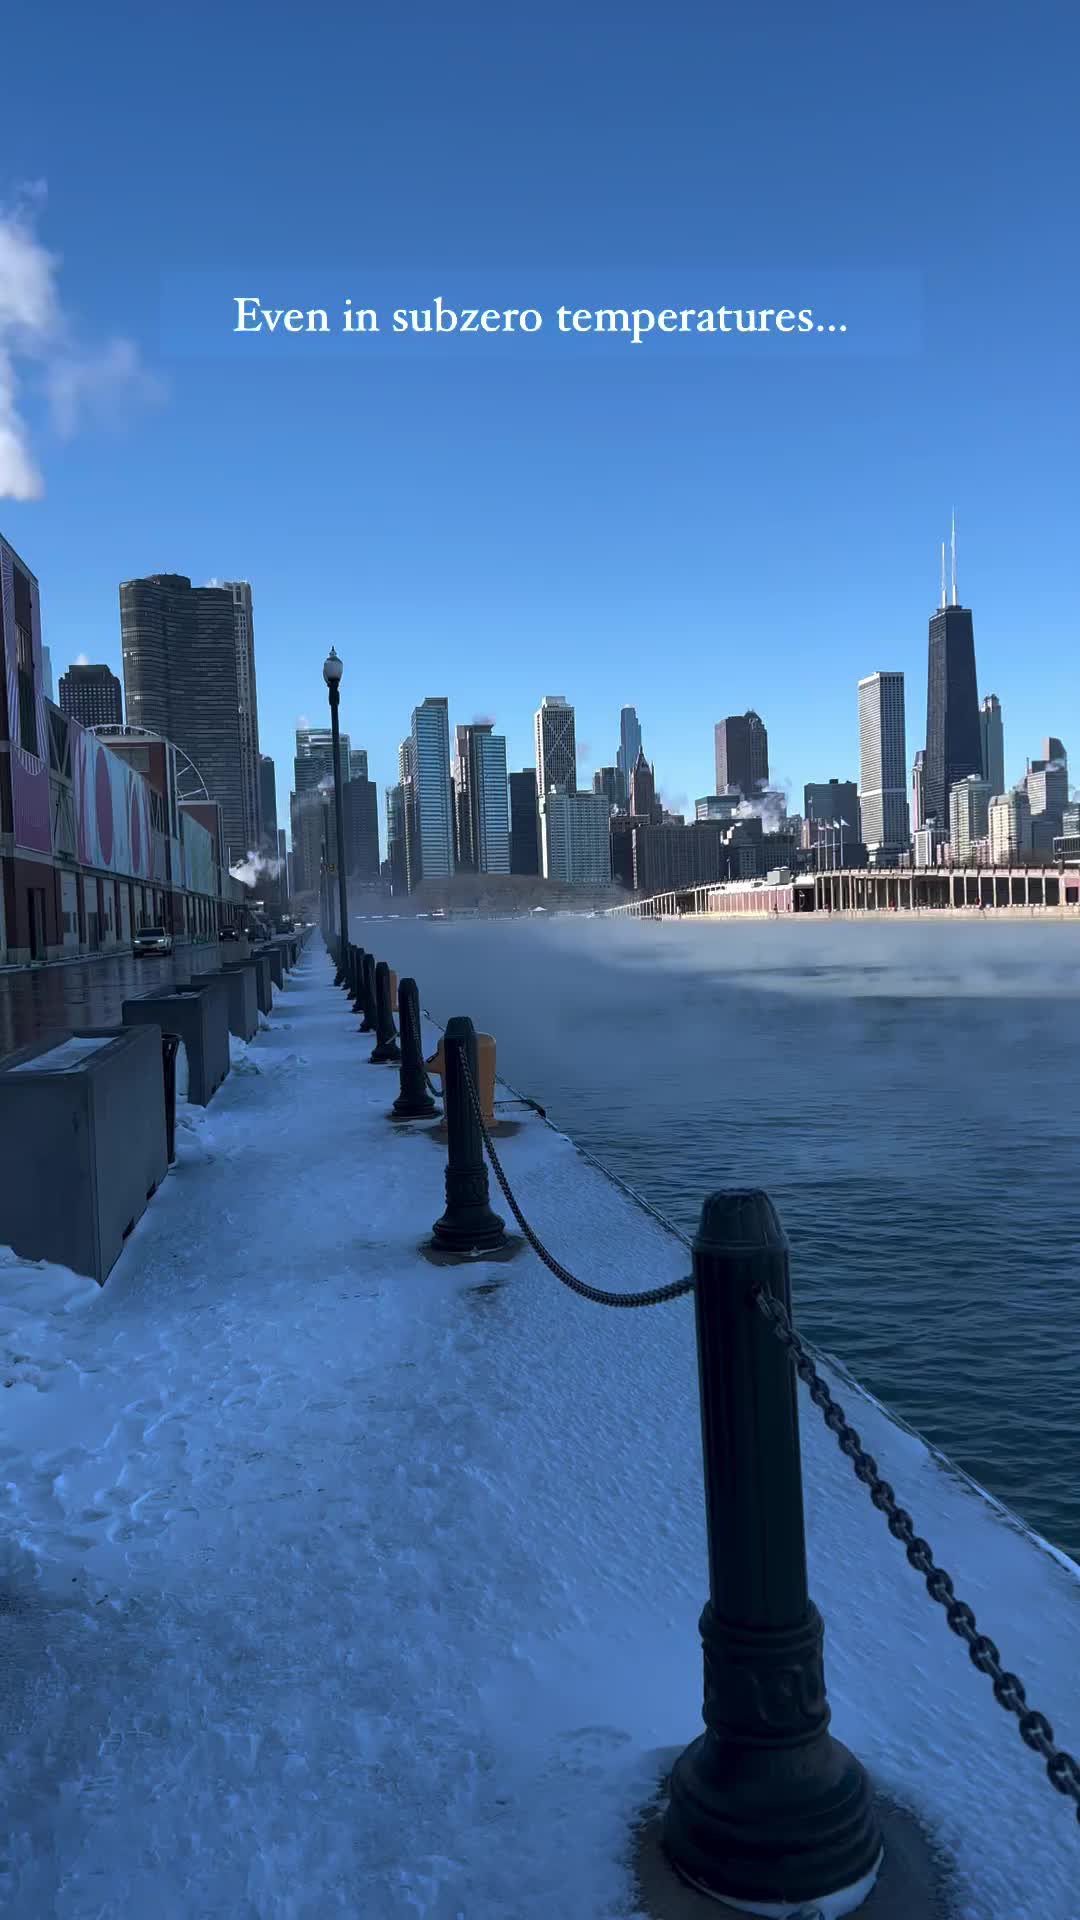 Lake Michigan's Winter Transformation: Ice Waves & Chill